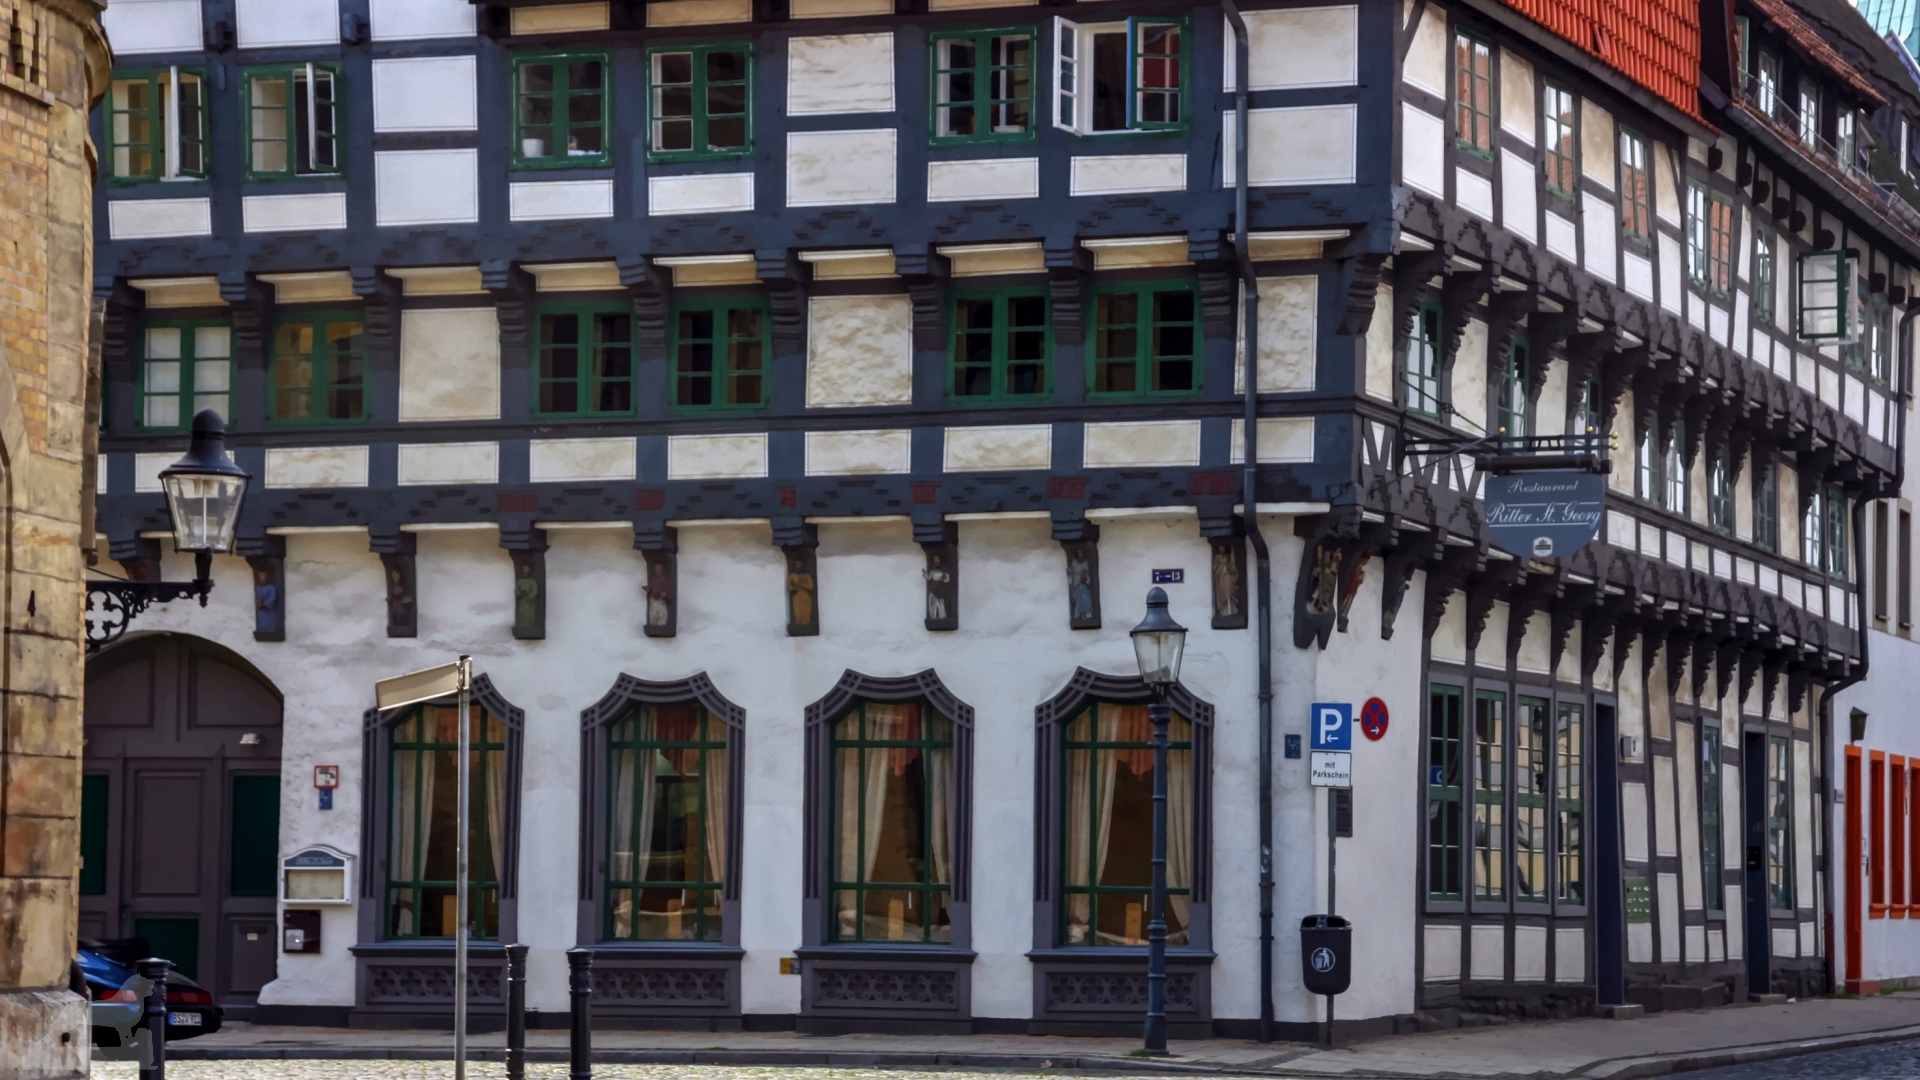 Knochenhauerhaus